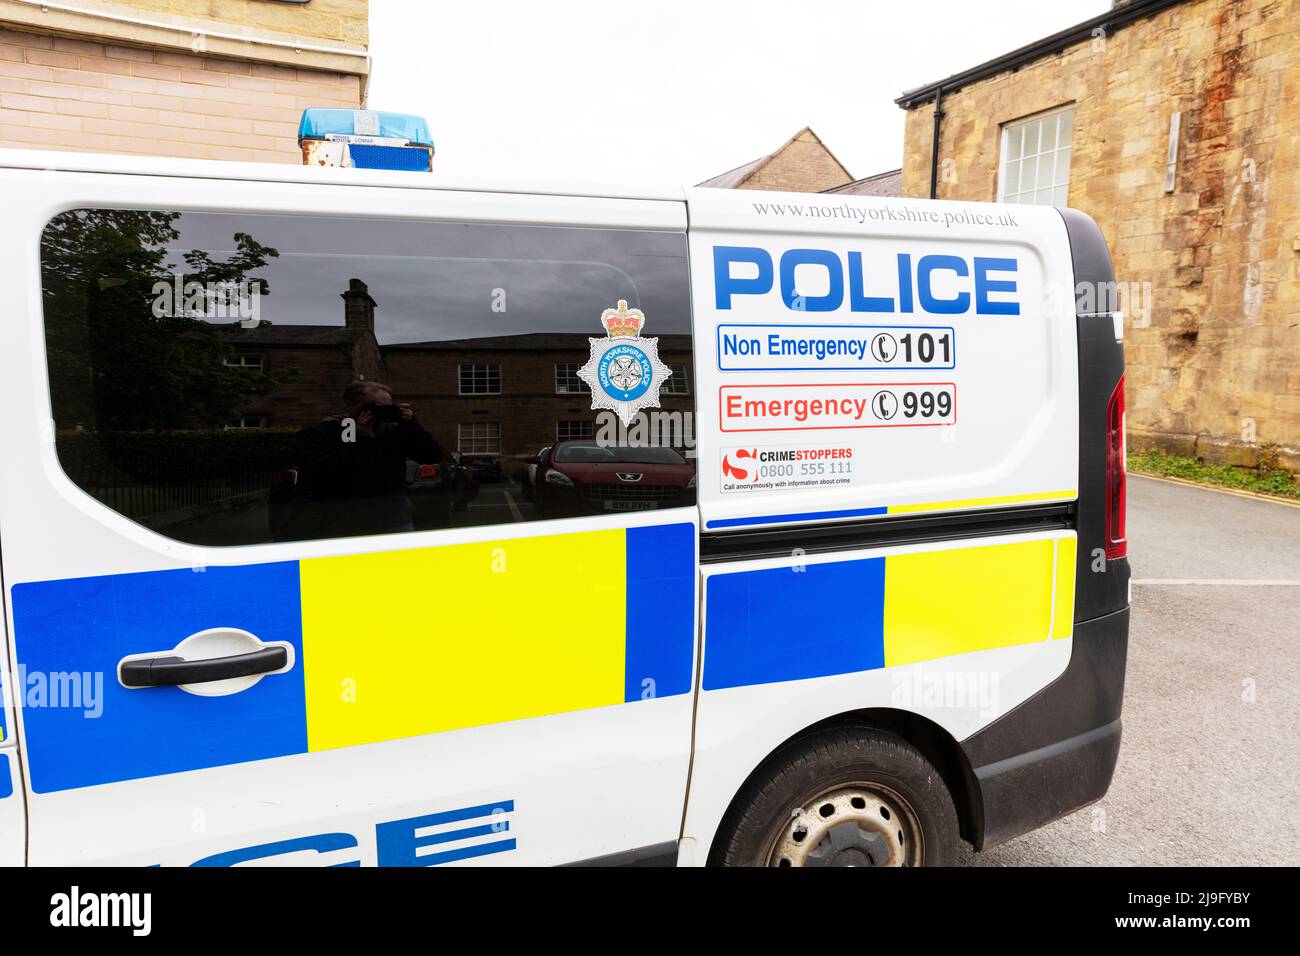 North Yorkshire police,police,police sign,police UK,UK police,Knaresborough Town, Yorkshire, UK, England,police van,riot van,police vehicle,van,sign, Stock Photo